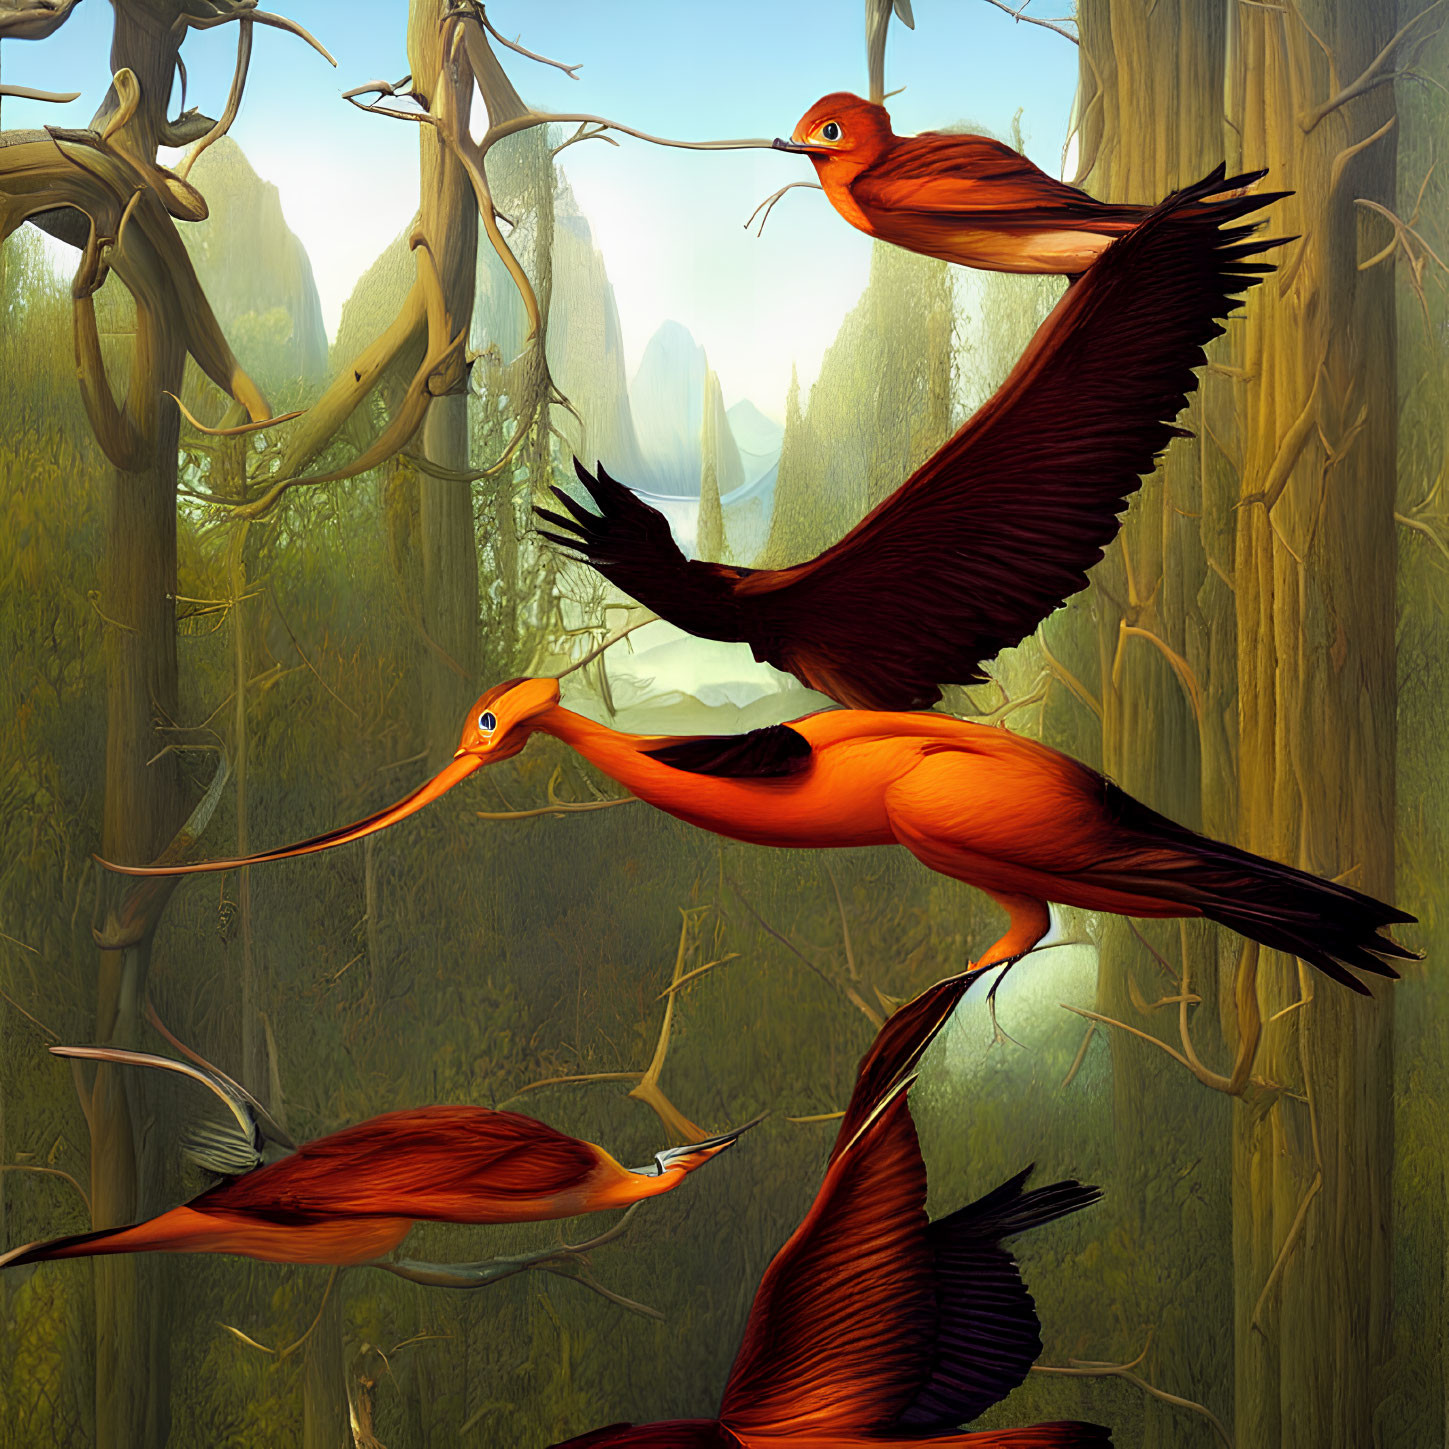 Vibrant orange birds with long beaks flying in green forest